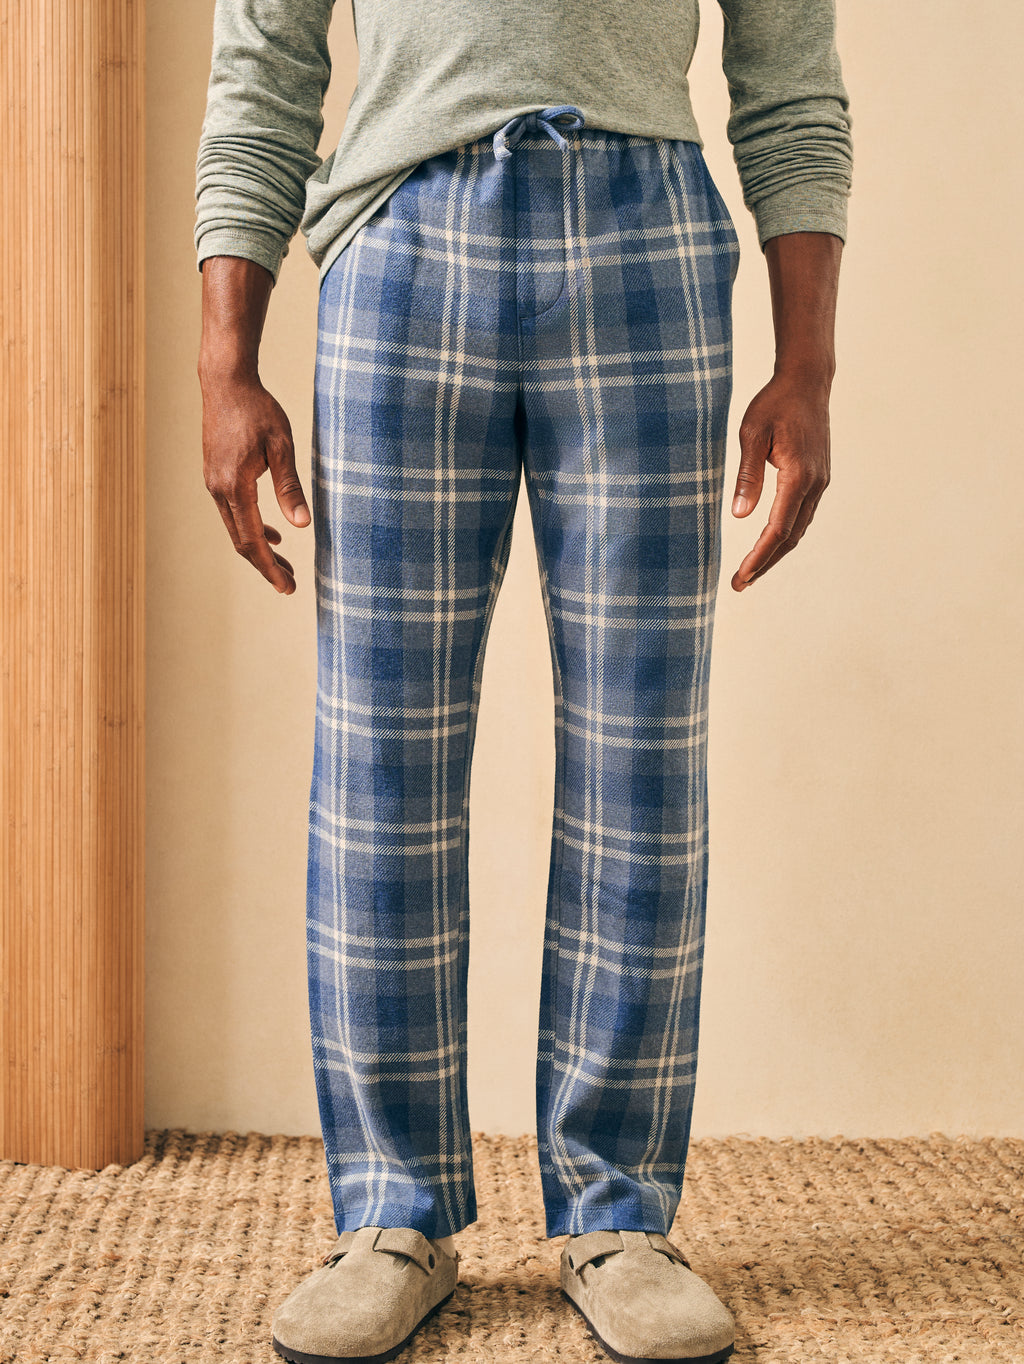 Pajama Pants, Blue White Check Flannel